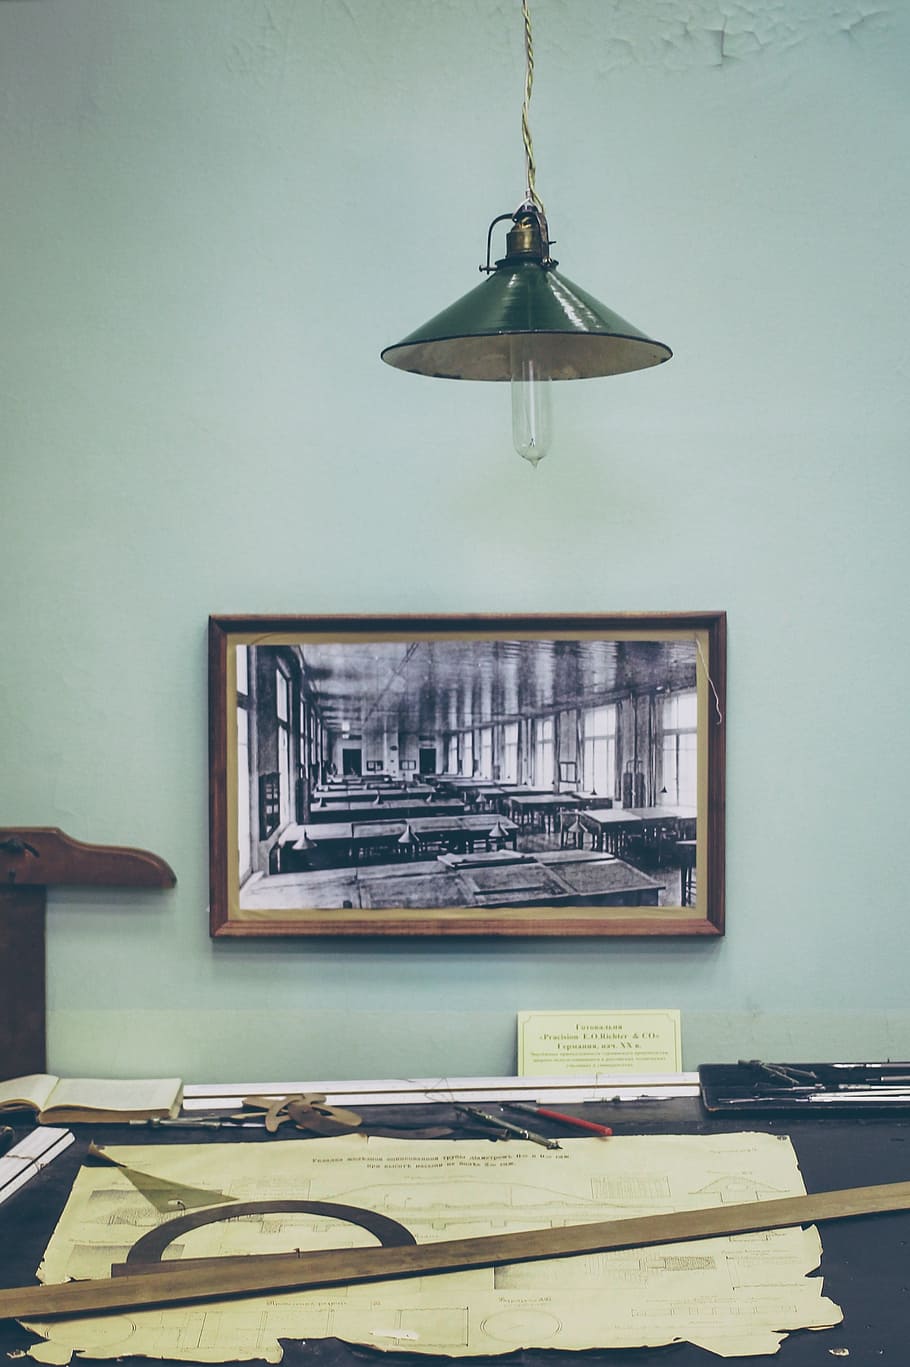 Hd Wallpaper Green Pendant Lamp Vintage Desk Ruler Tools